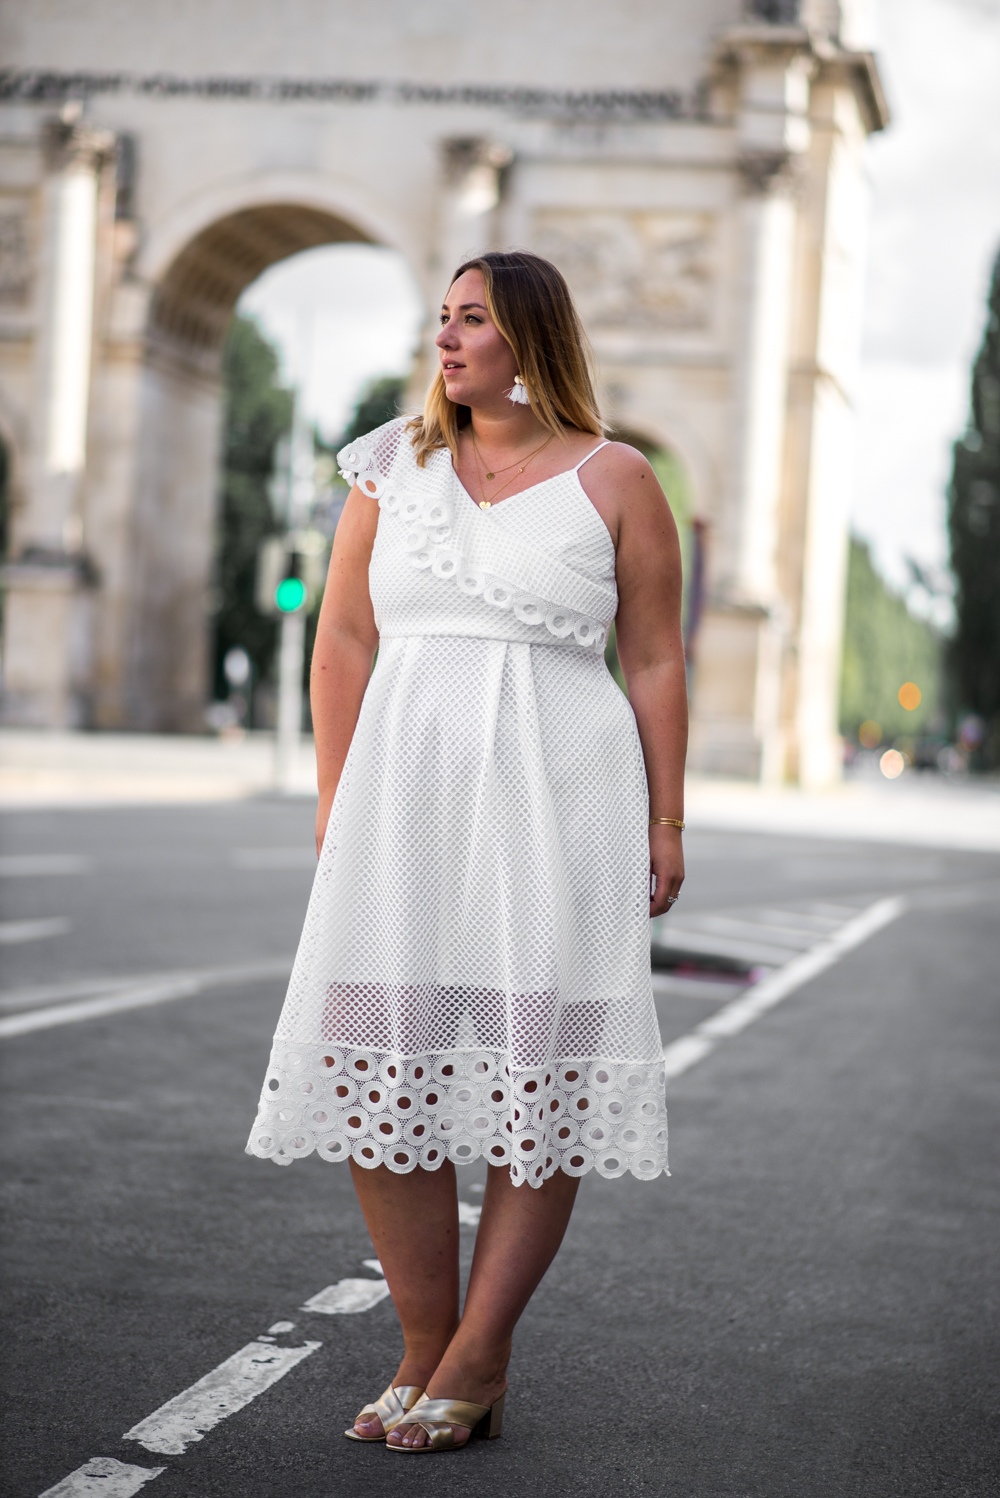 Soulfully_White Dress_Plus Size_Blogger_Next_Plus size Deutschland (4 von 8)